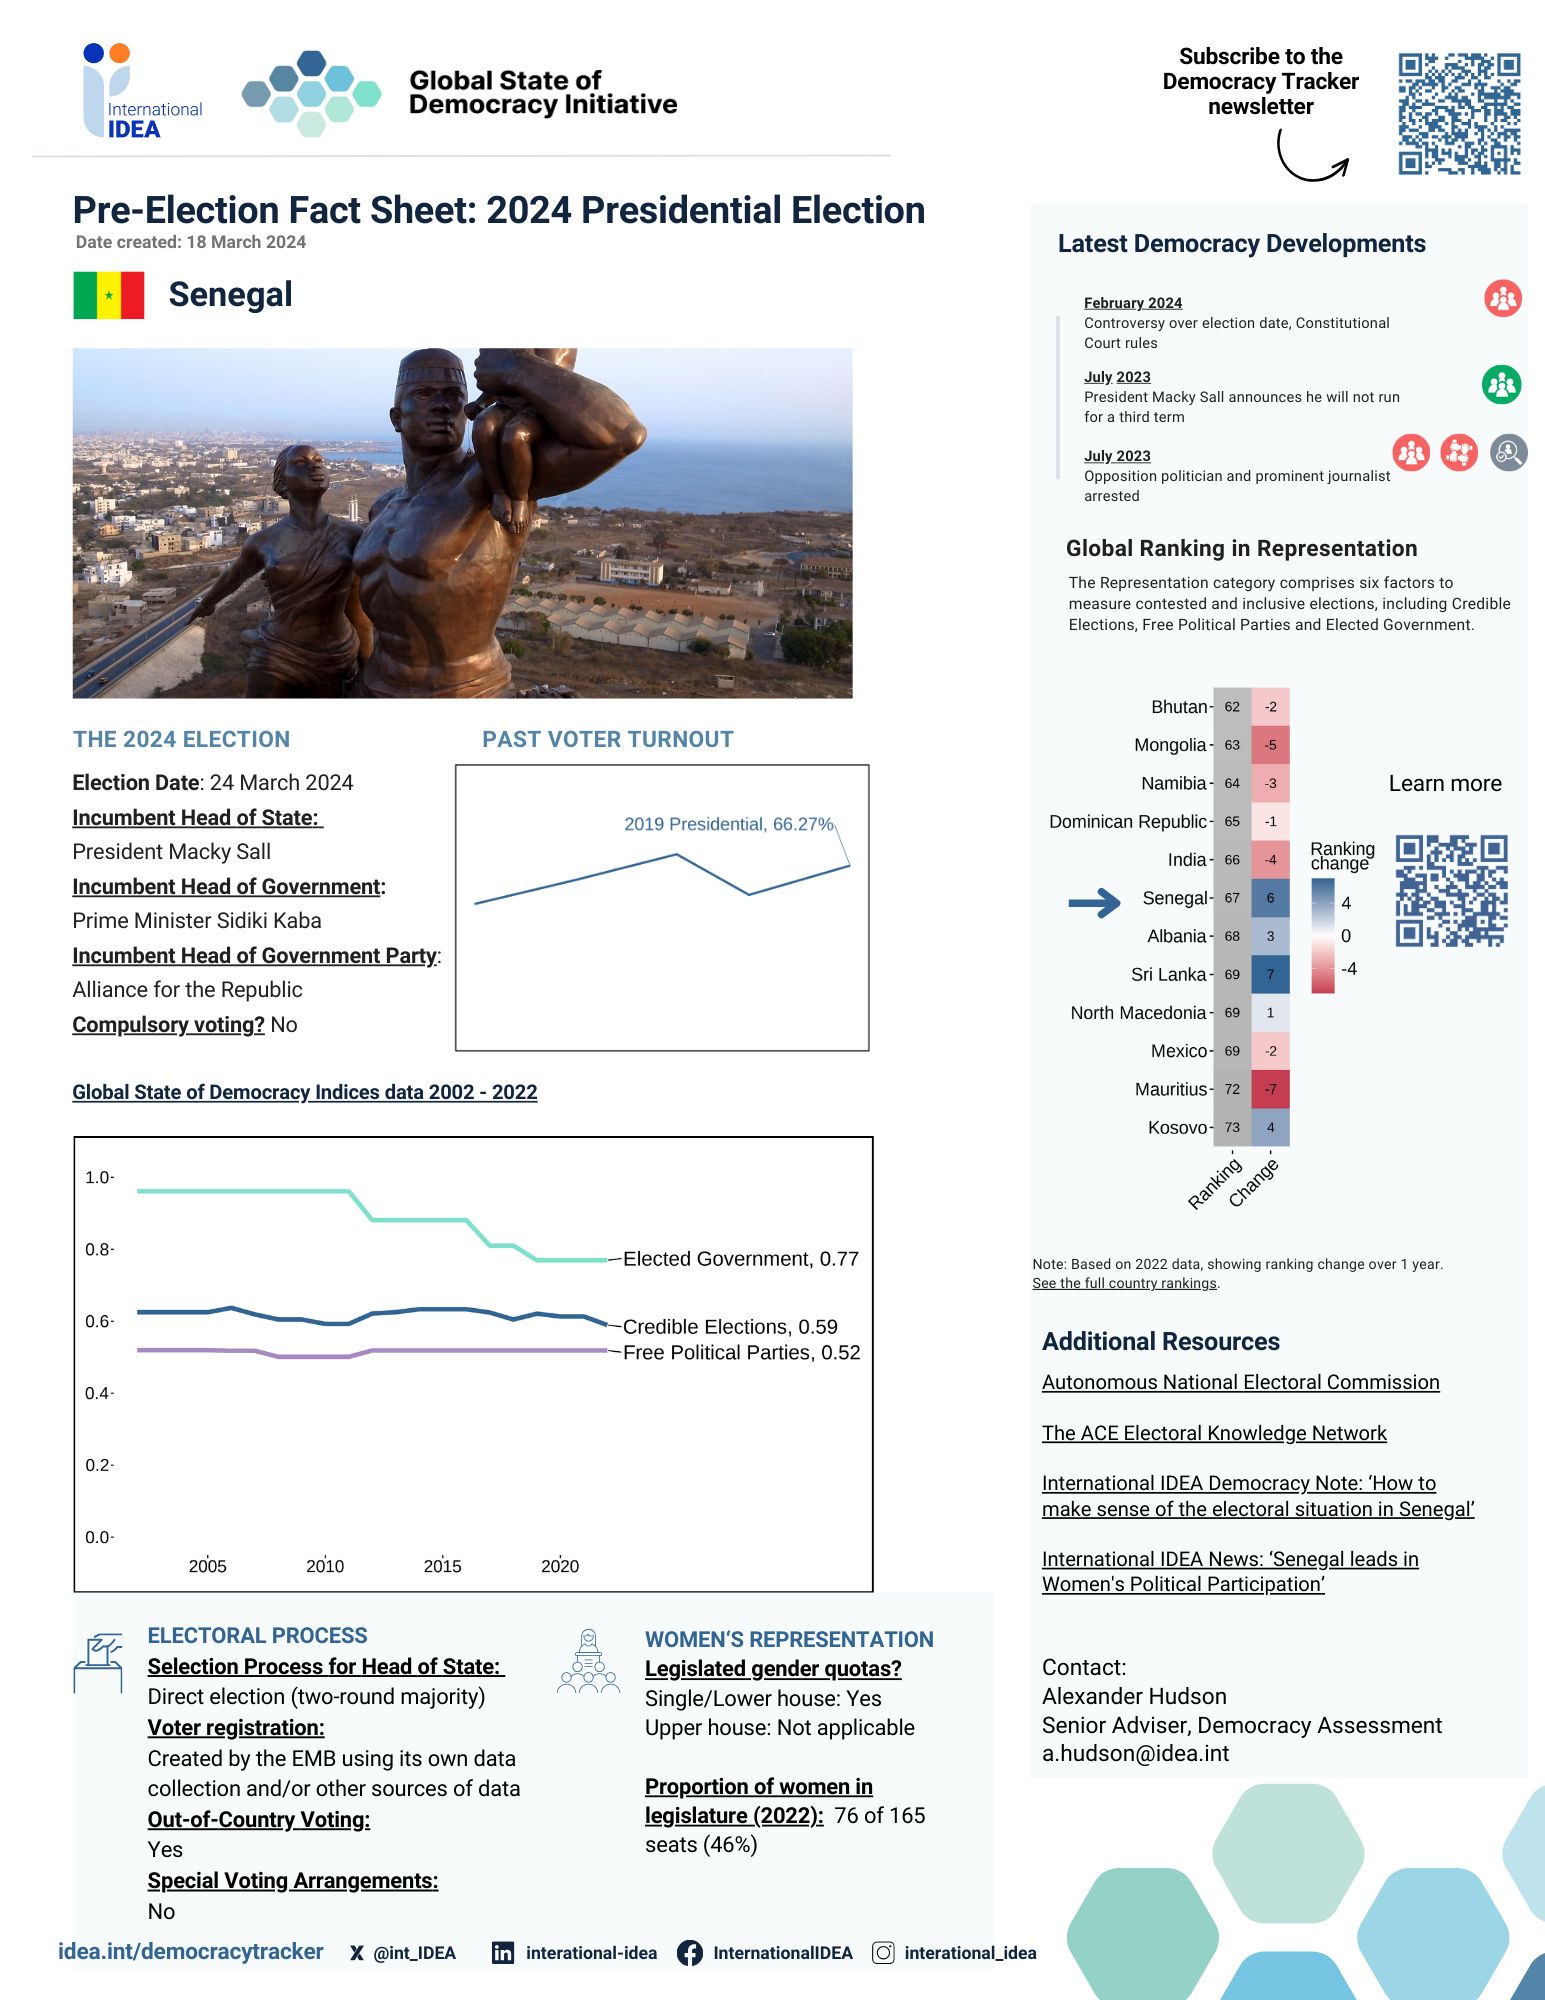 Pre-election factsheet for Republic of Senegal 